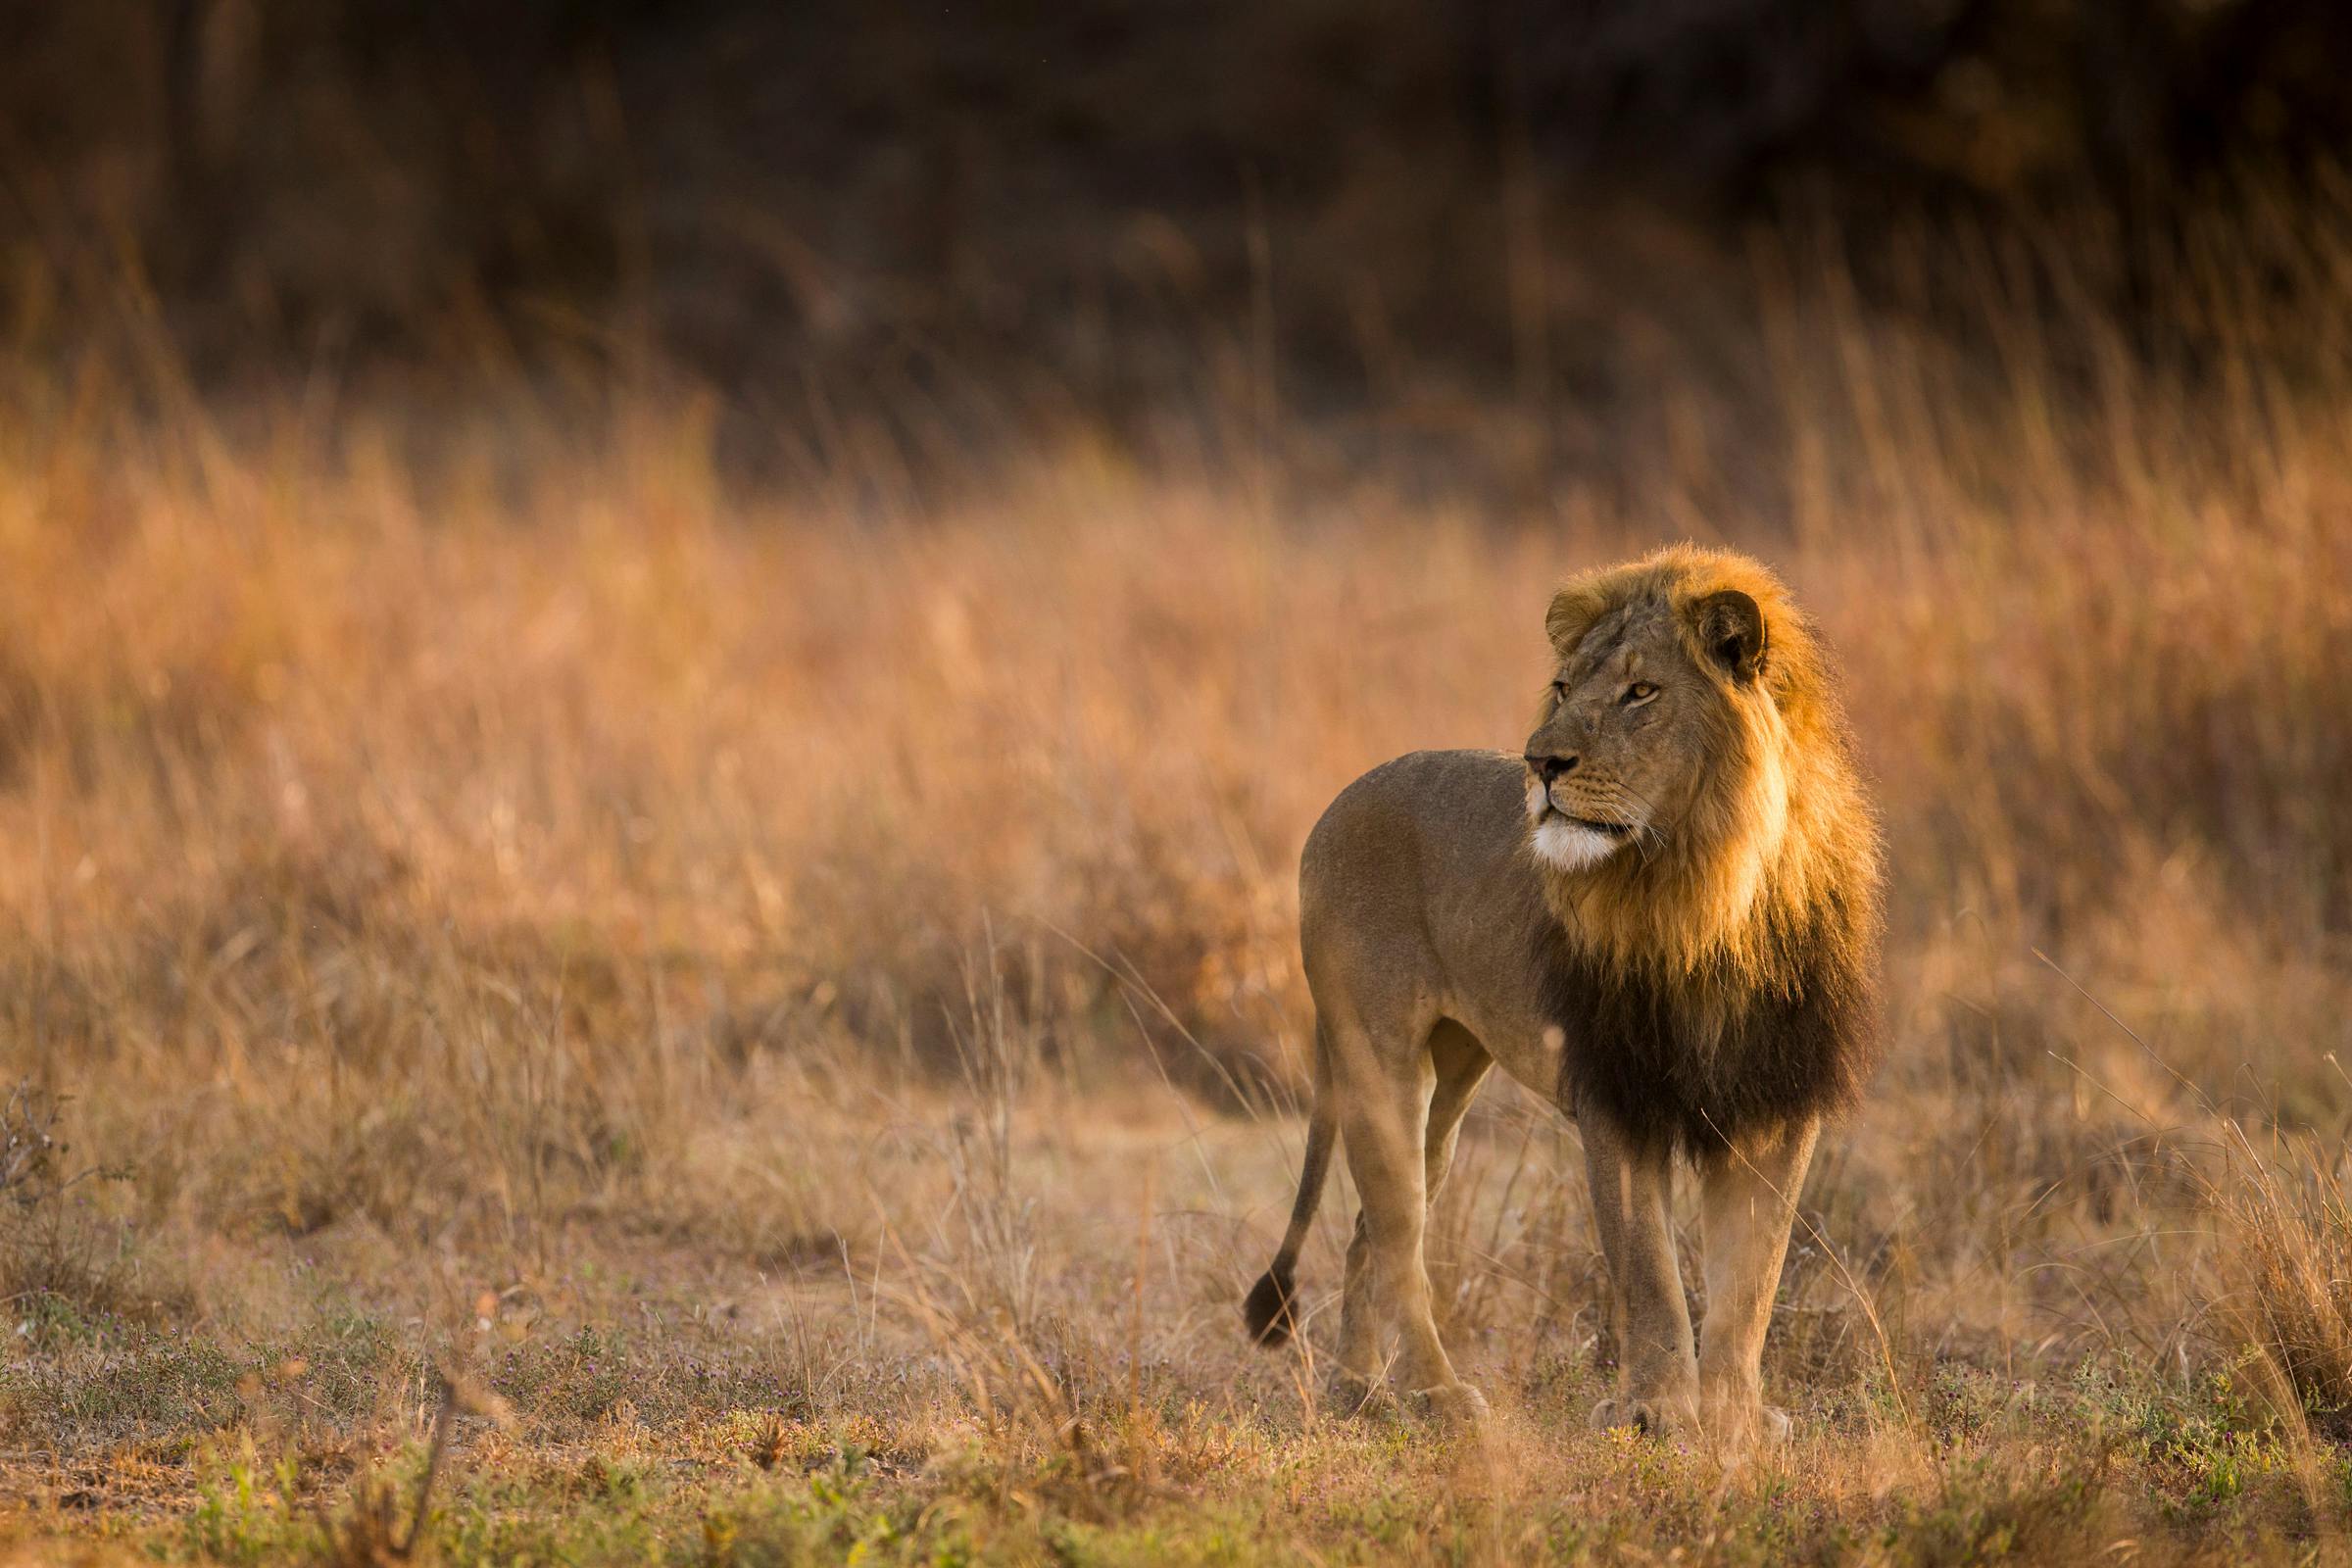 Panthera's Efforts to Save Senegal's Lions